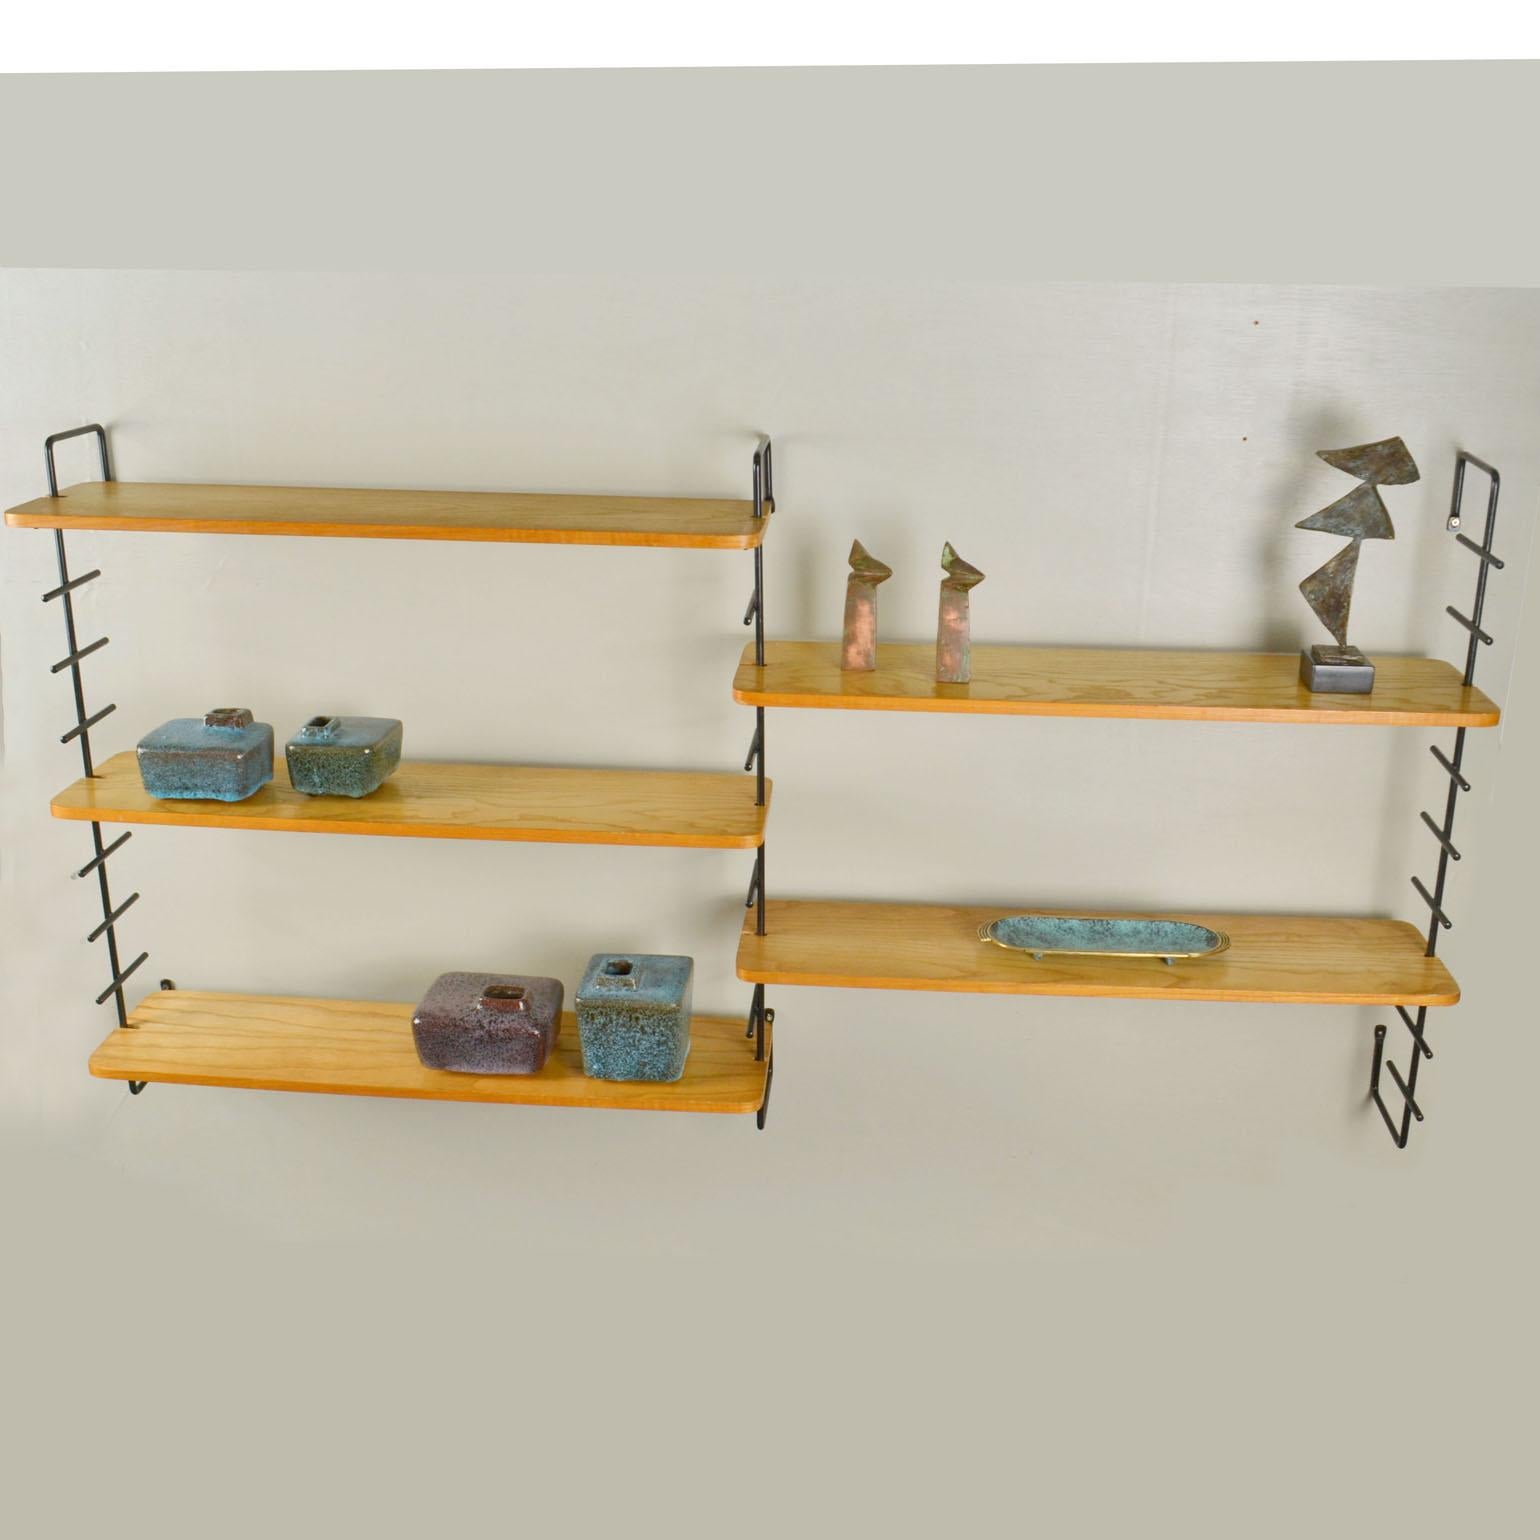 Minimalist modular wall mounted shelving unit with three metal uprights and five oak veneered shelves, Swiss 1960's.
Each shelf measures 75-20 cm